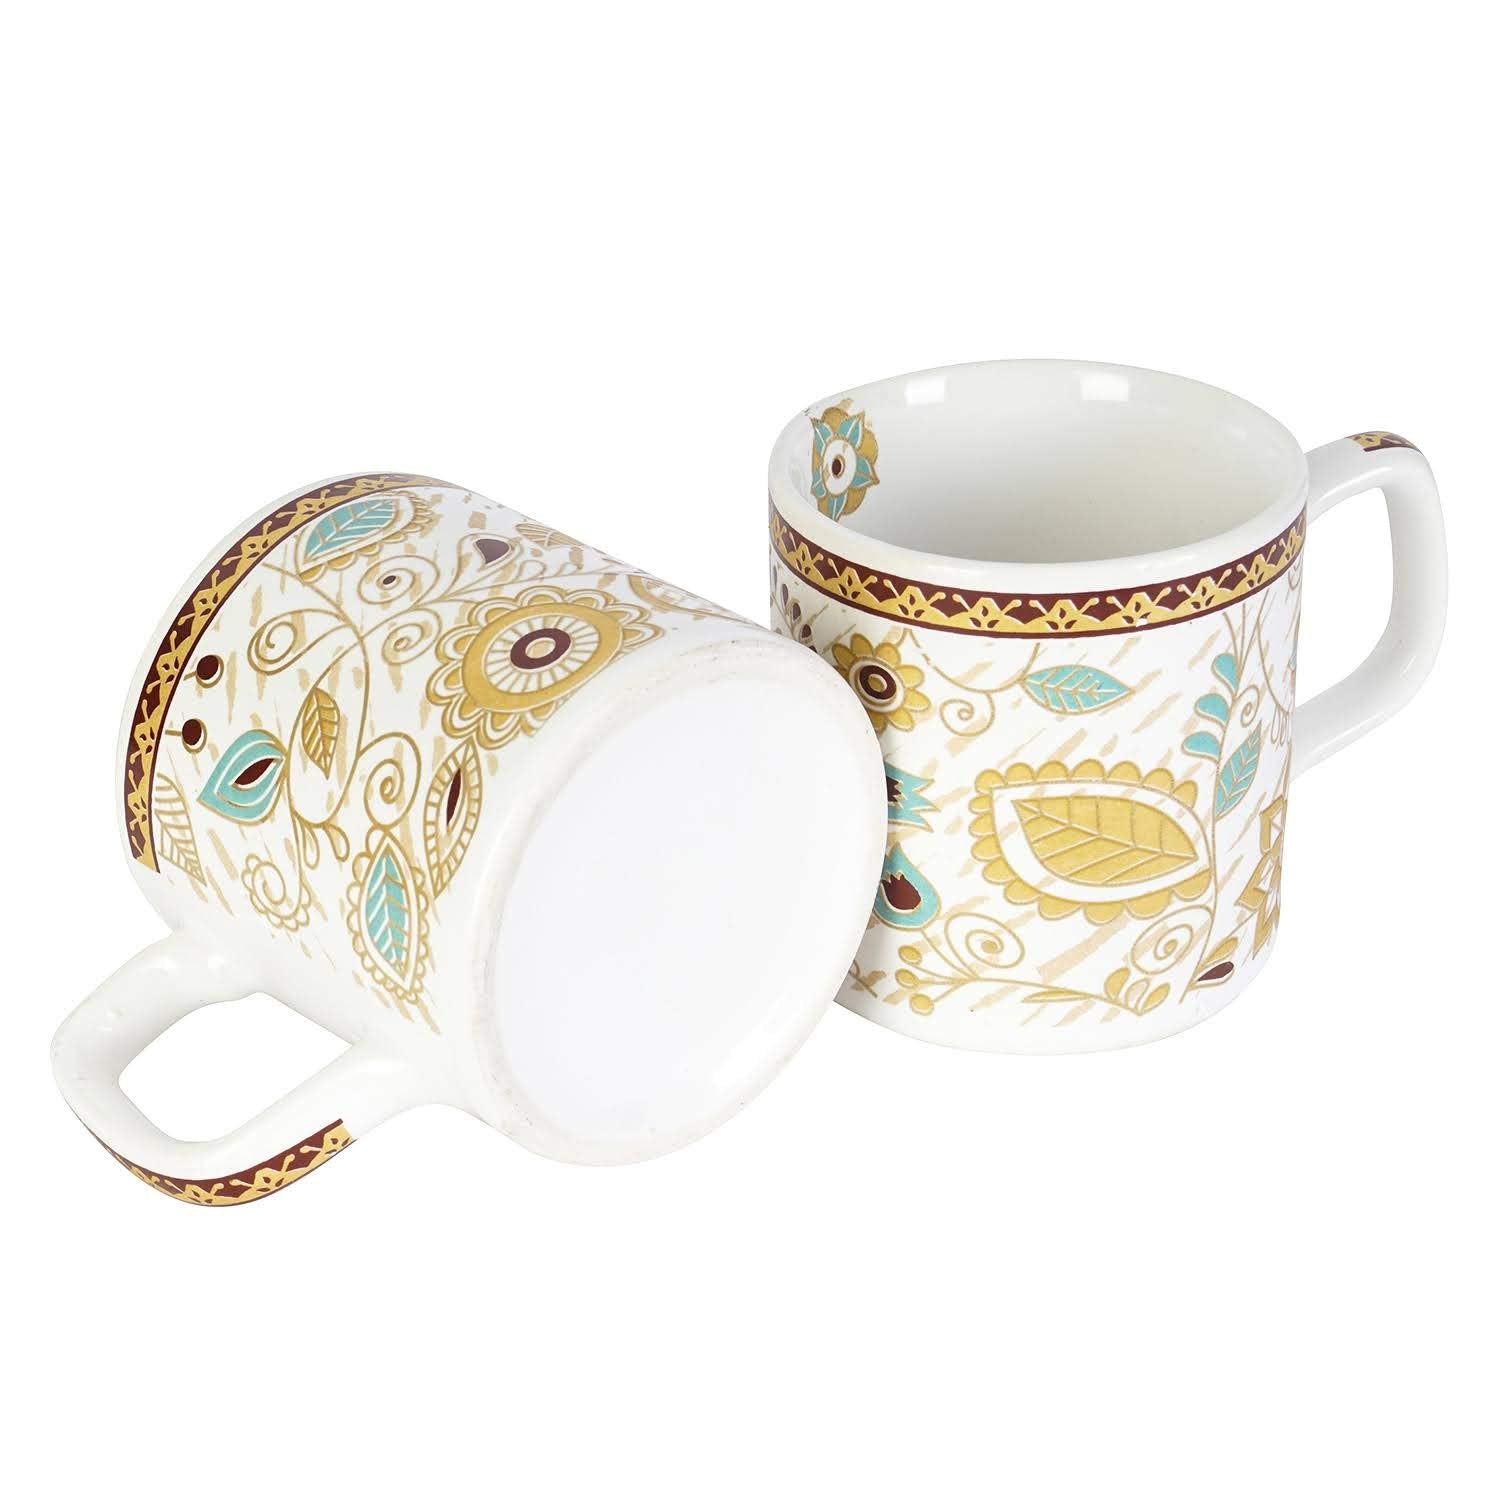 Designer Handmade Ceramic Tea & Coffee Cups - (Pack of 6) 150ml